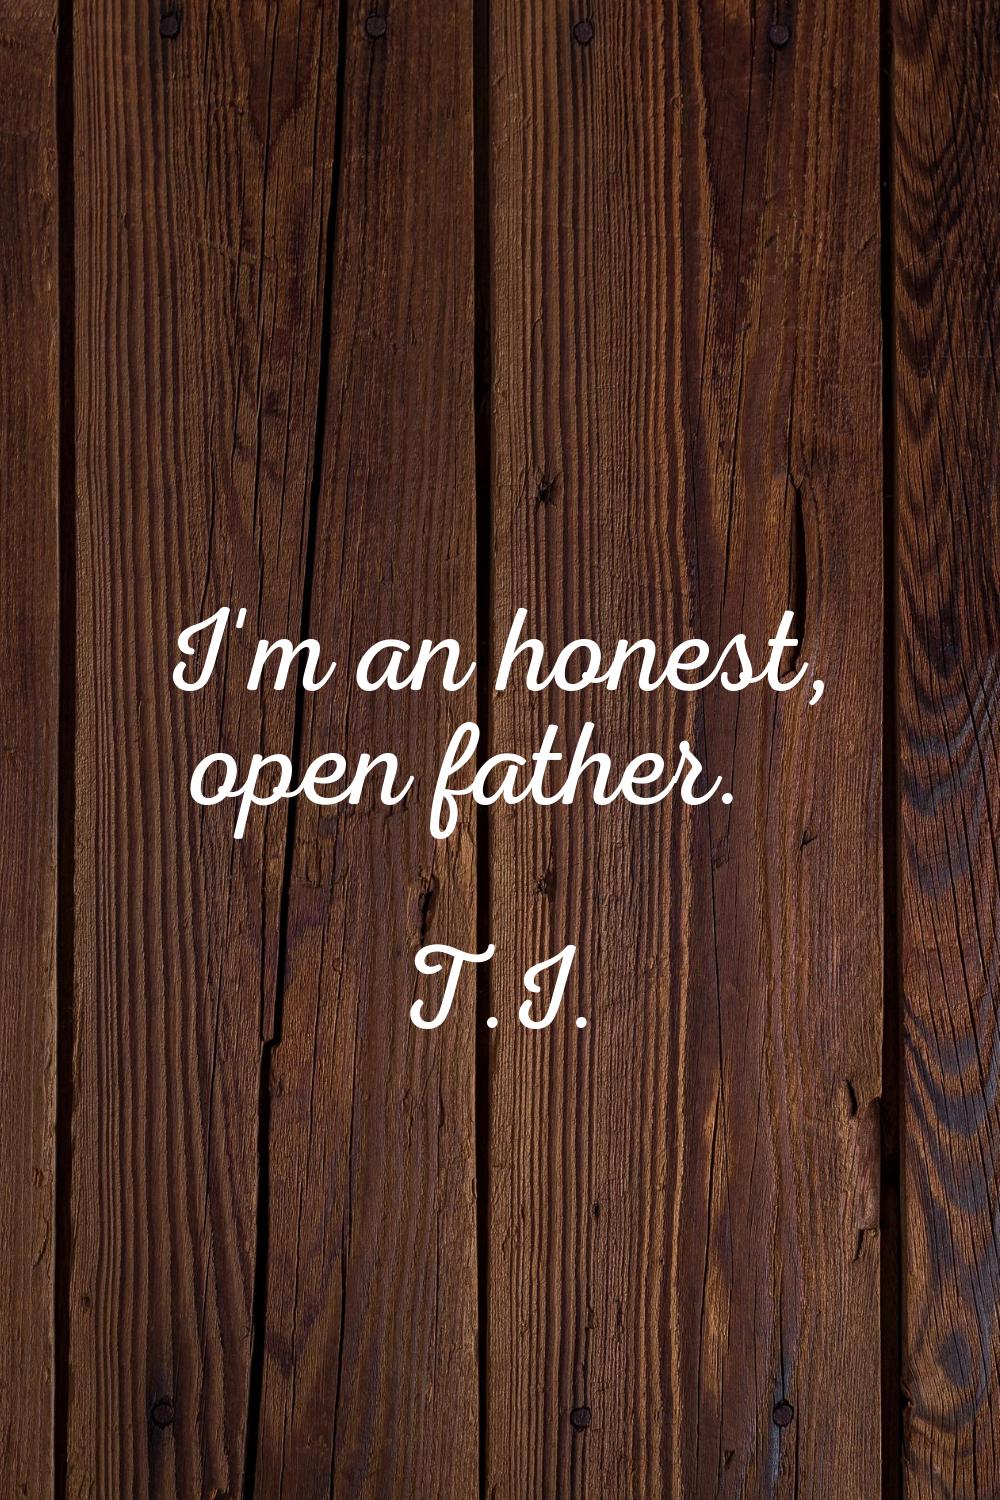 I'm an honest, open father.